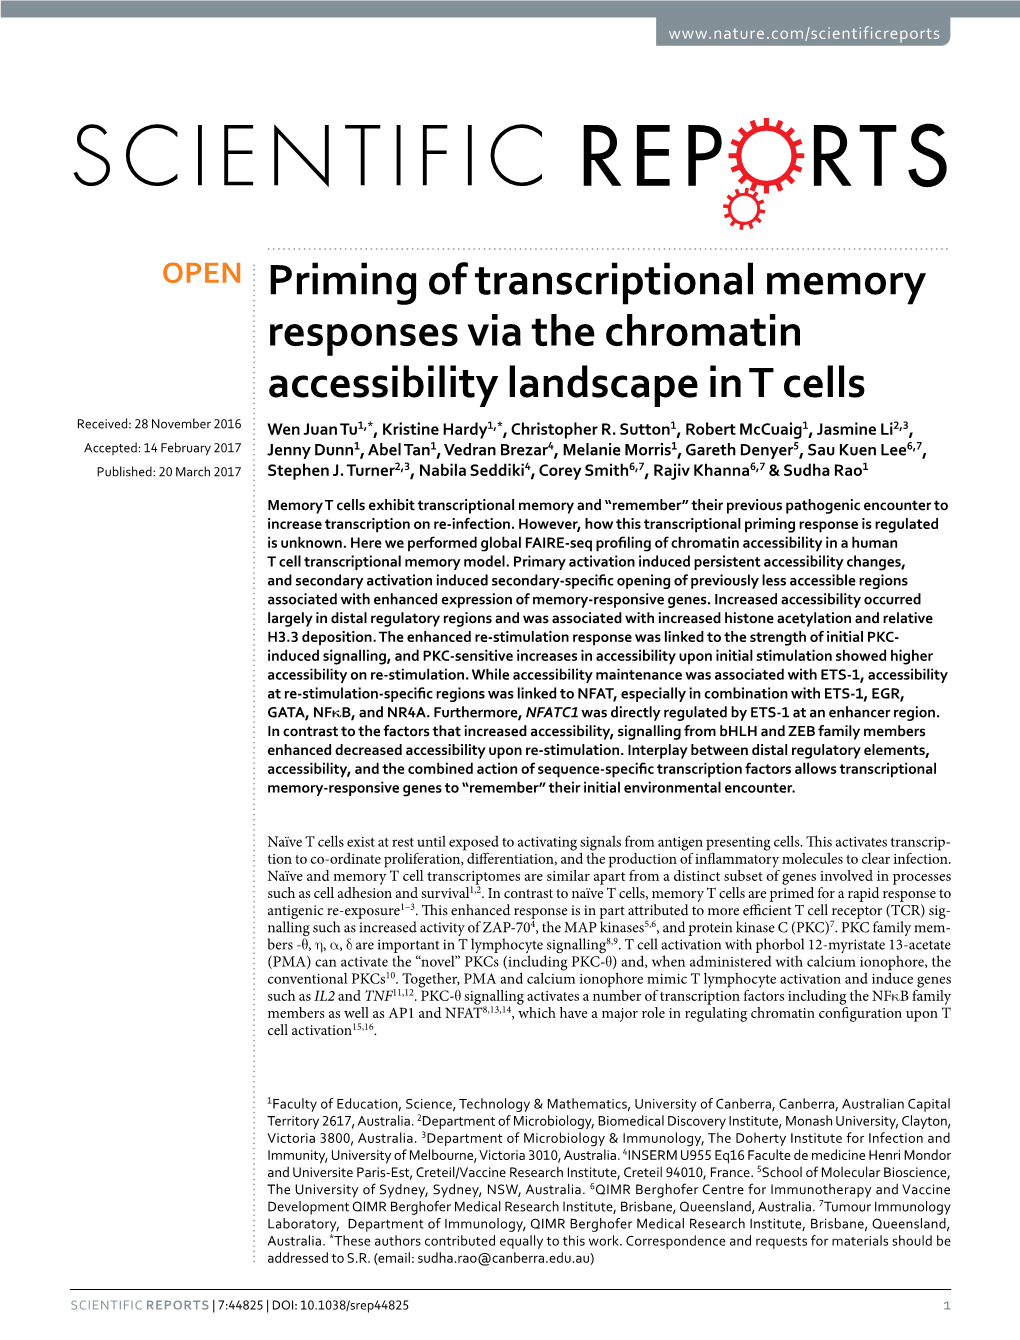 Priming of Transcriptional Memory Responses Via the Chromatin